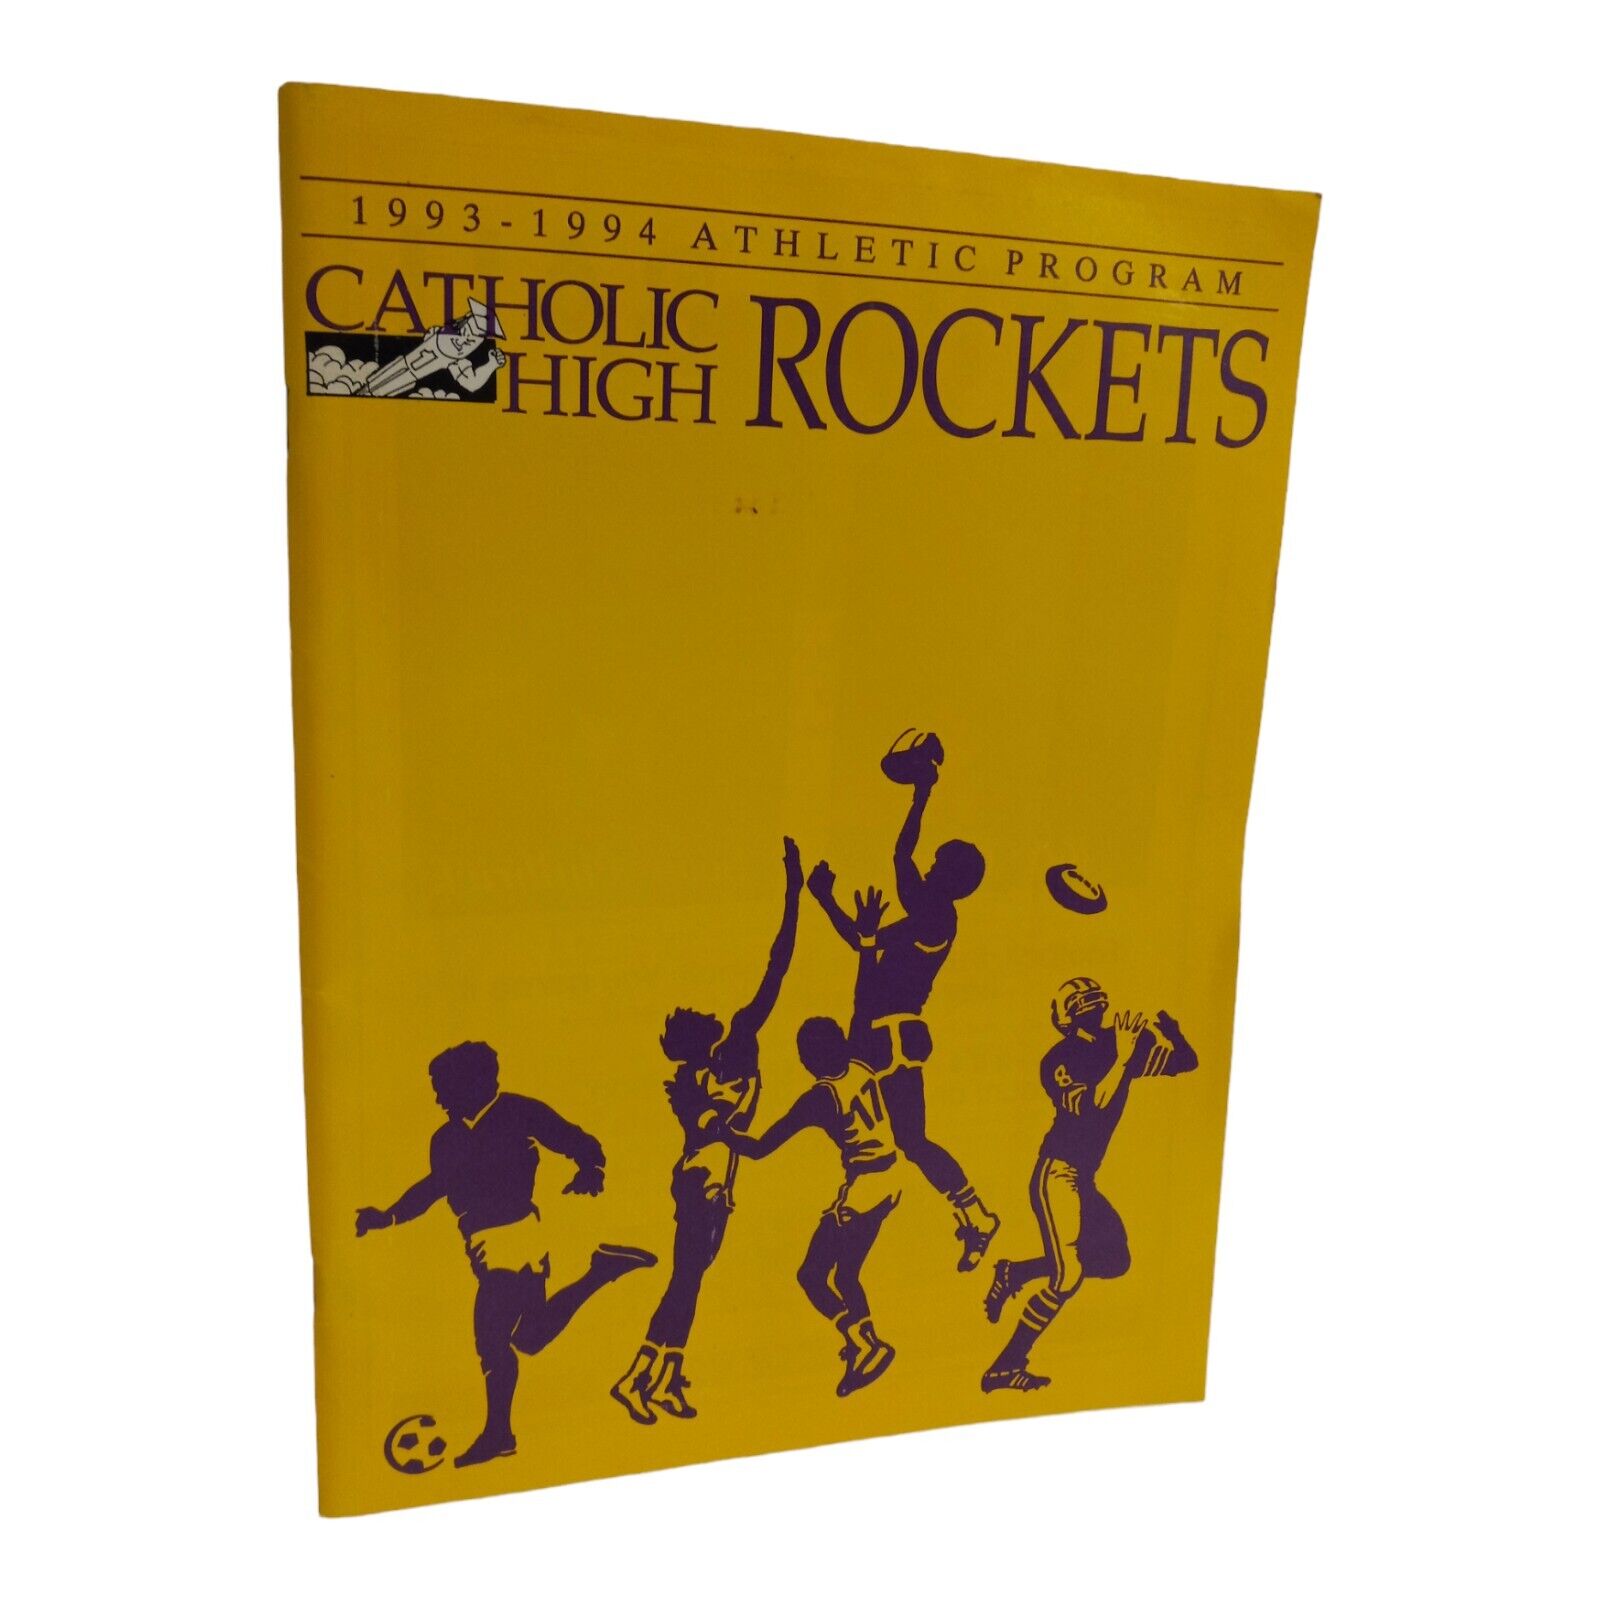 central catholic high school Rockets Athletic Program 1993-94